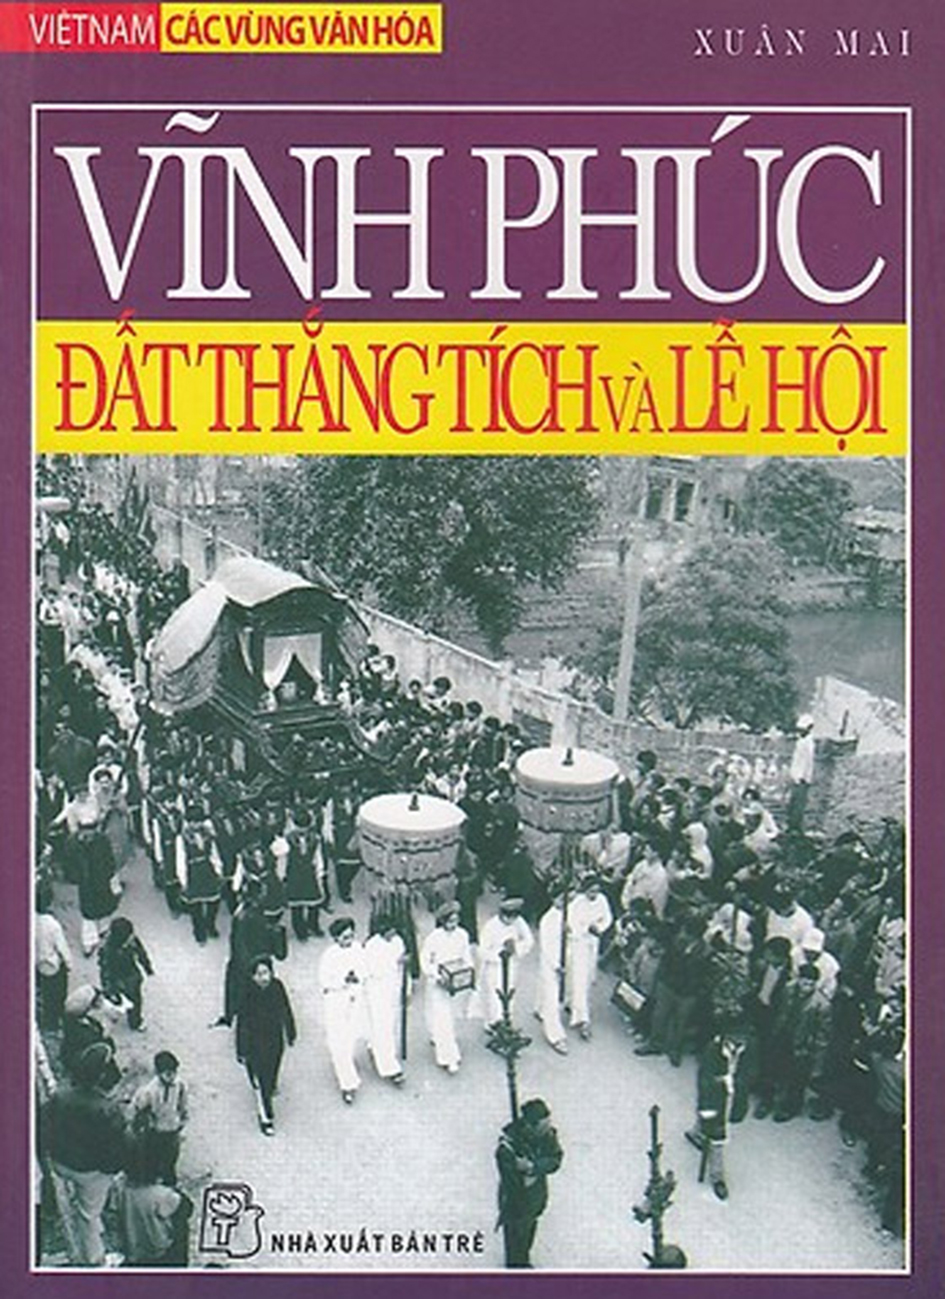 vinh phuc